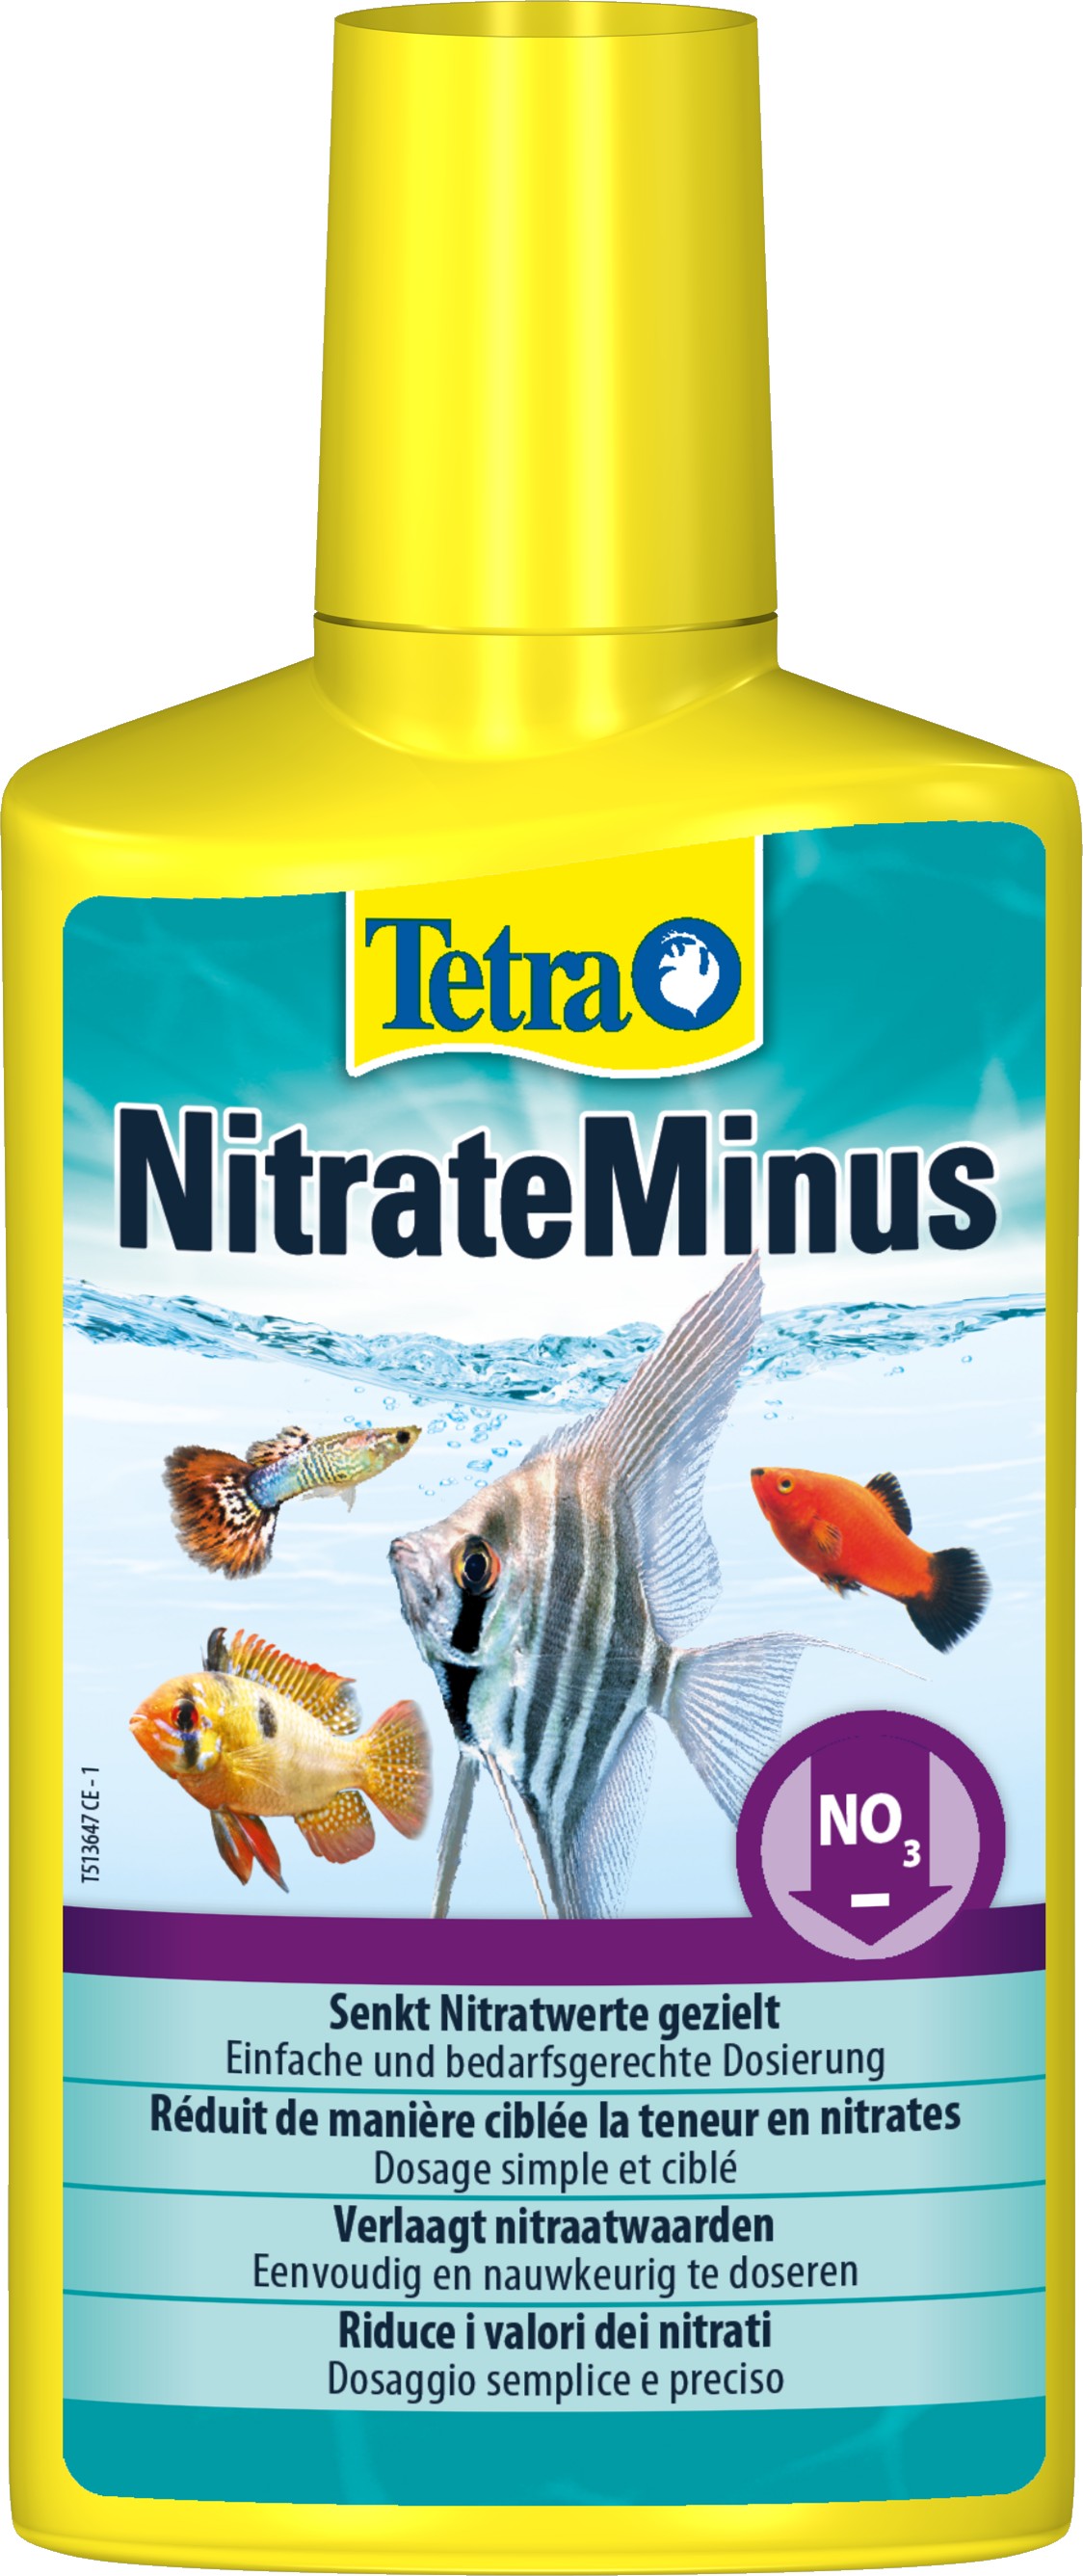 TetraAqua NitrateMinus 250 ml flüssig